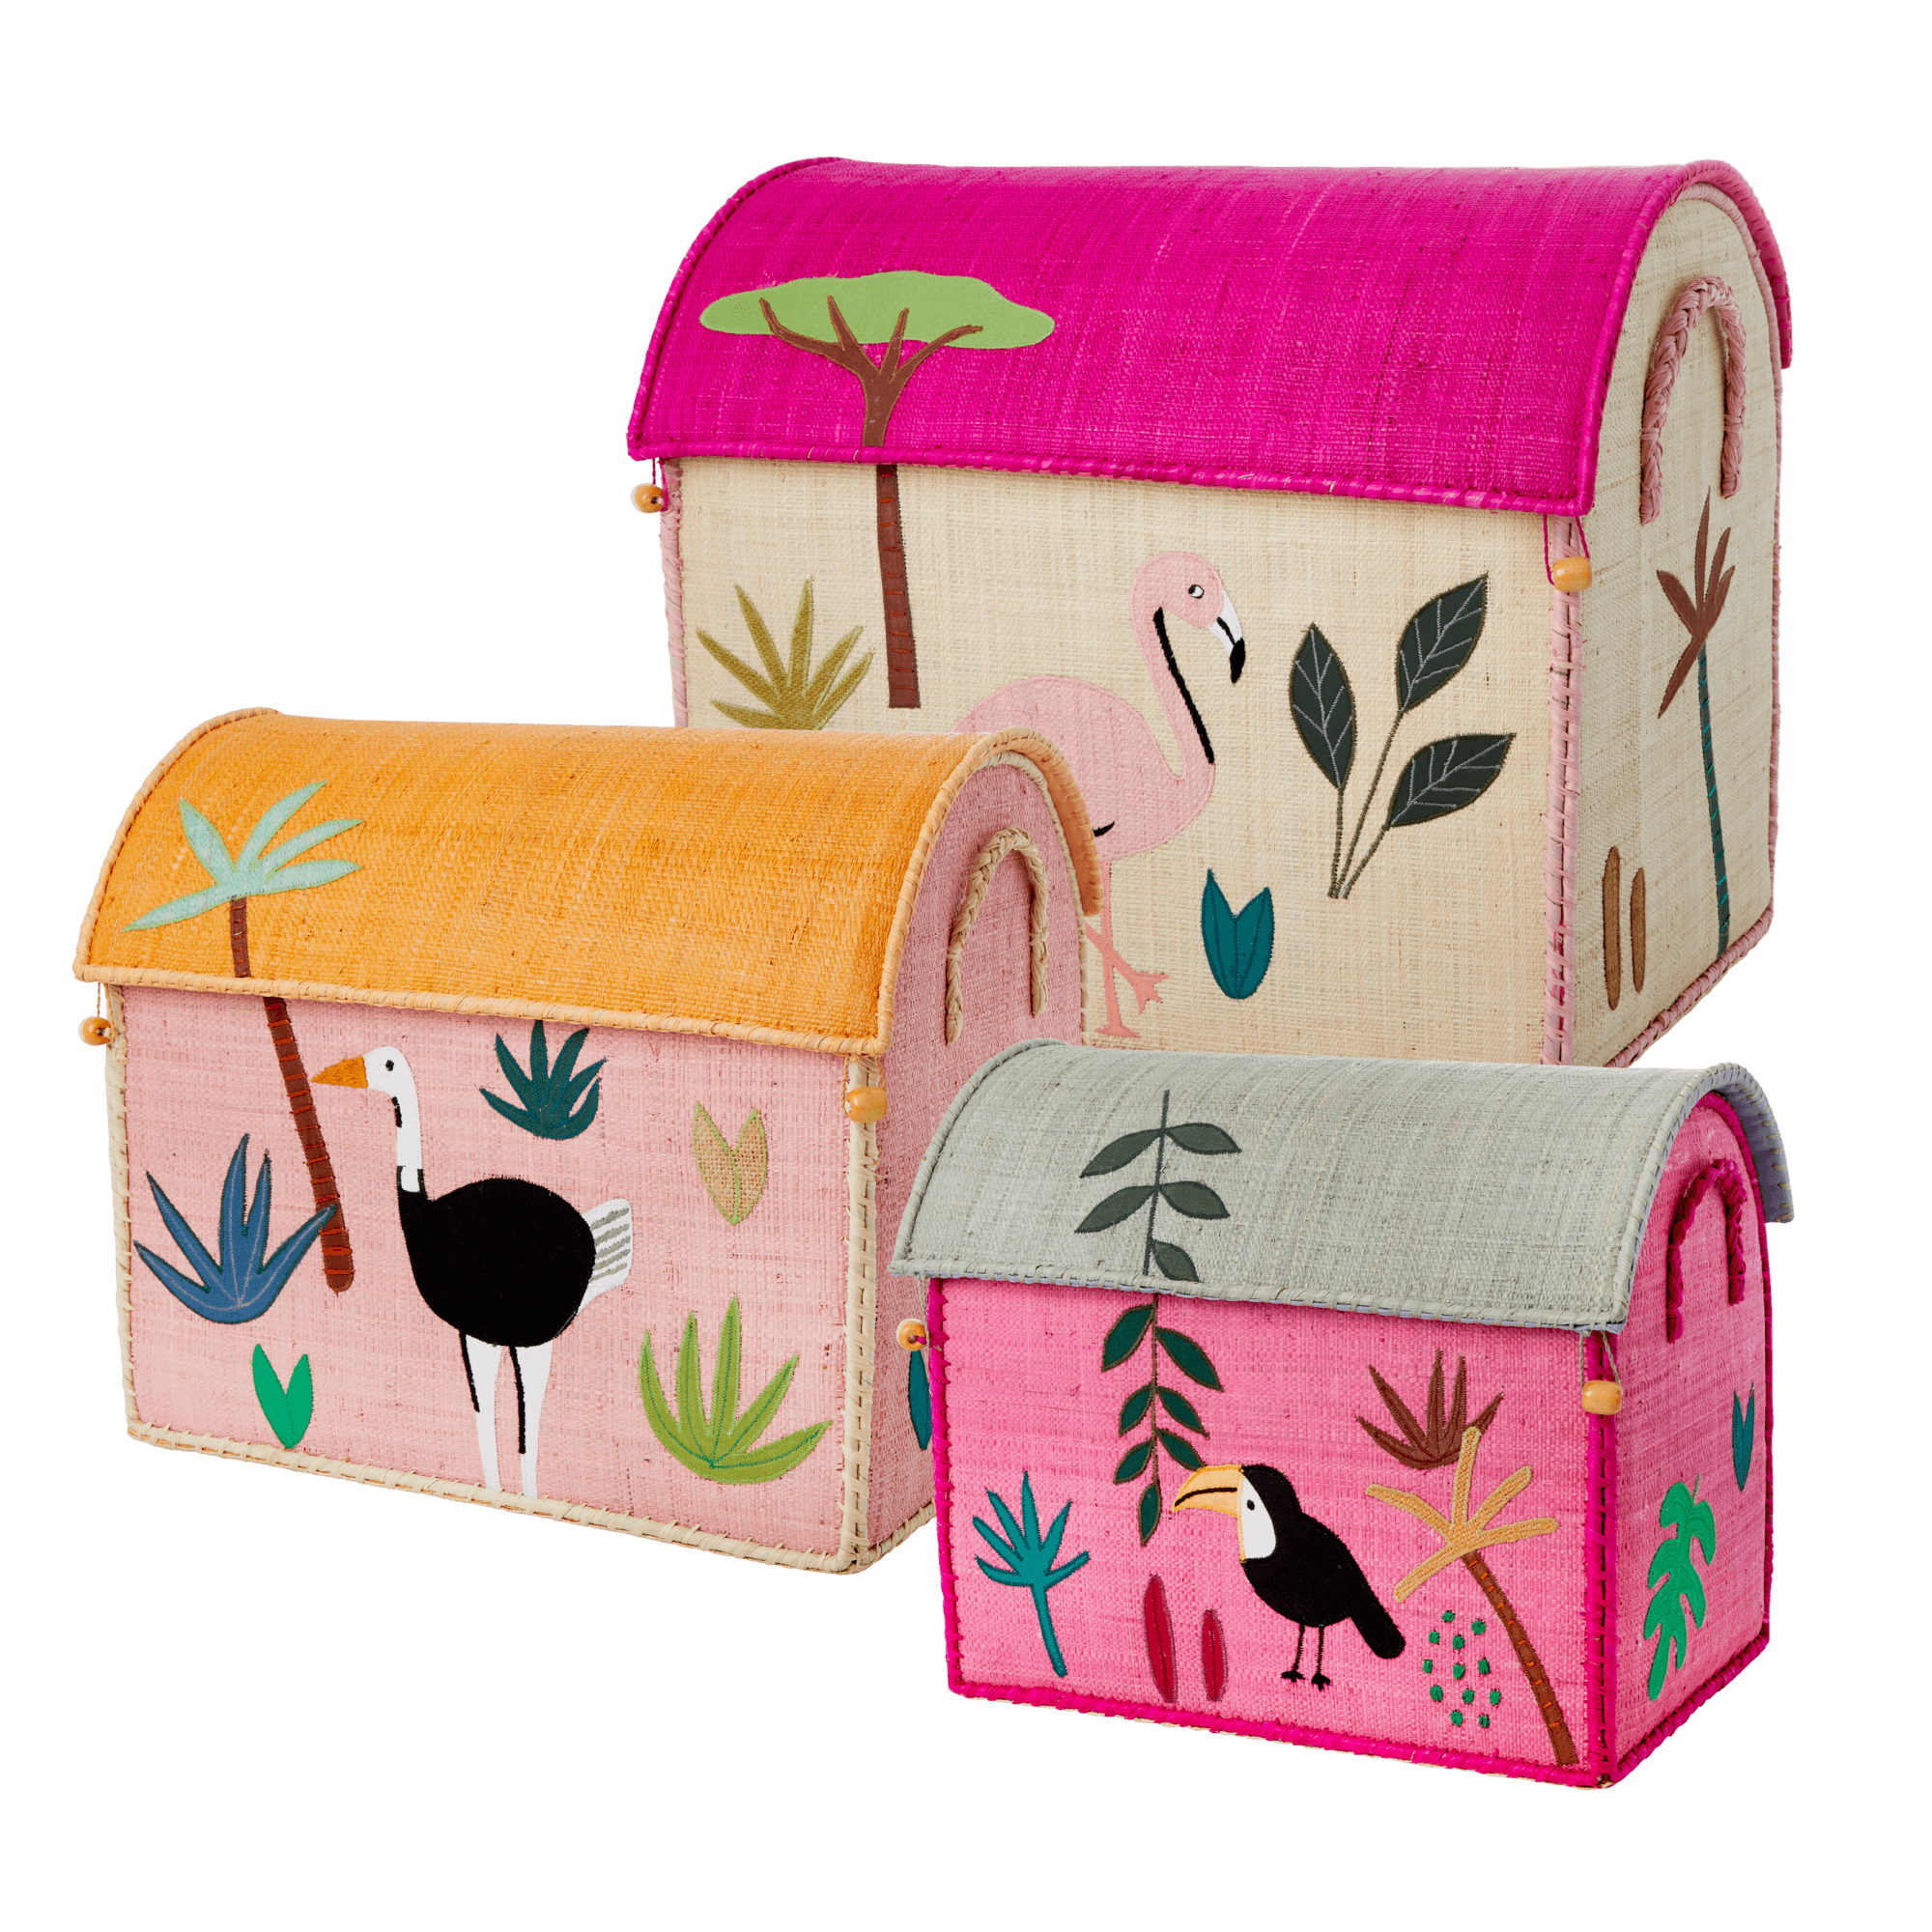 Rice - Large Set of 3 Toy Baskets- Pink Jungle Theme